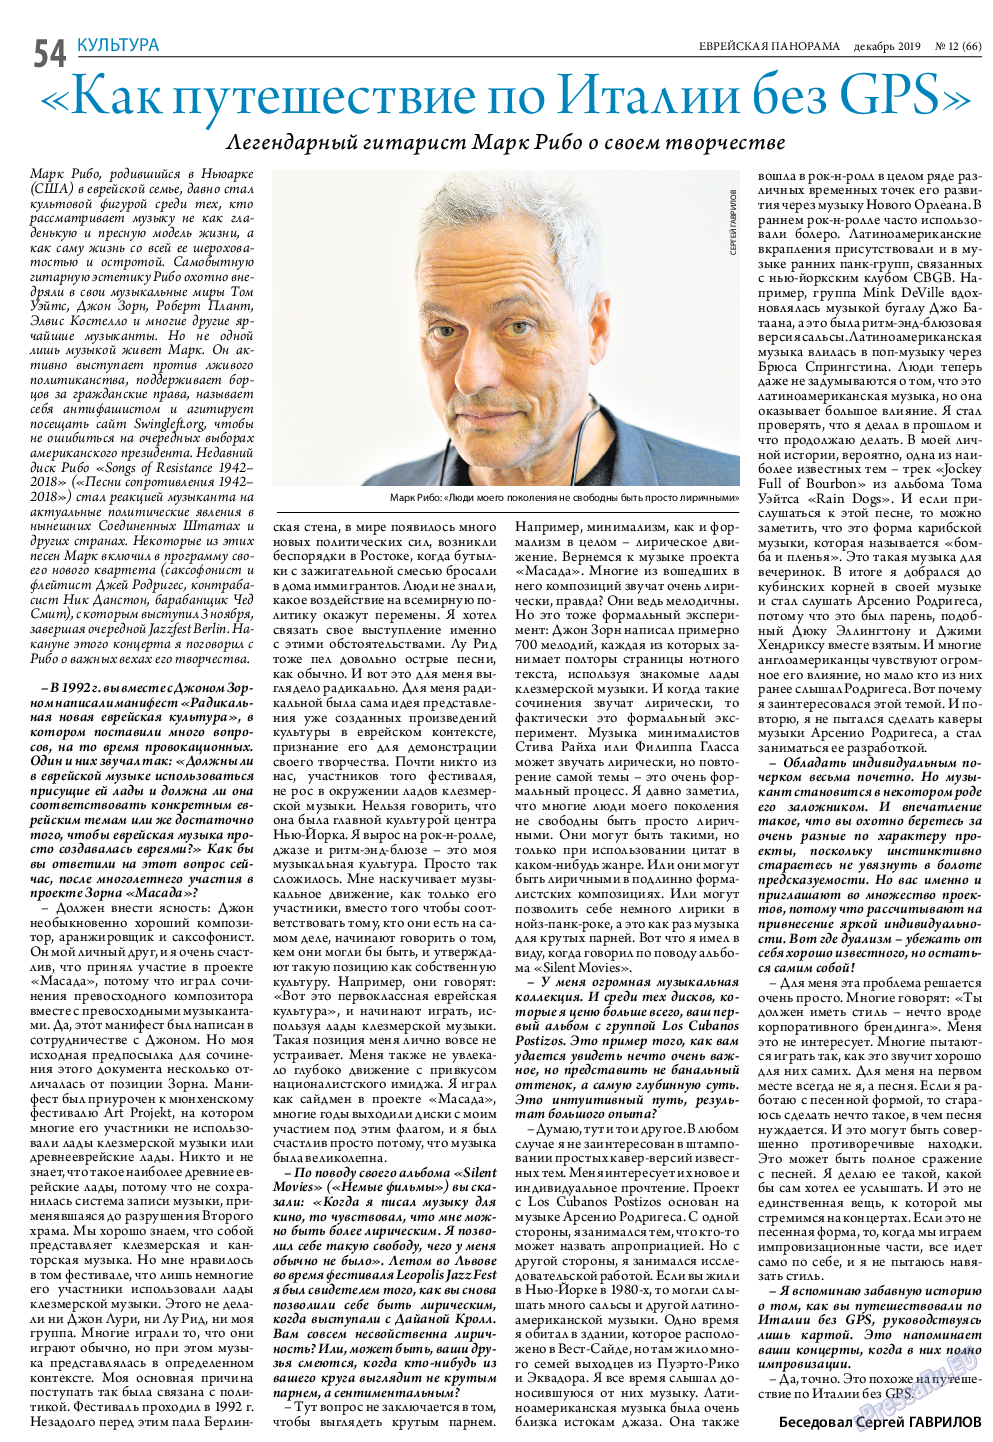 Еврейская панорама, газета. 2019 №12 стр.54